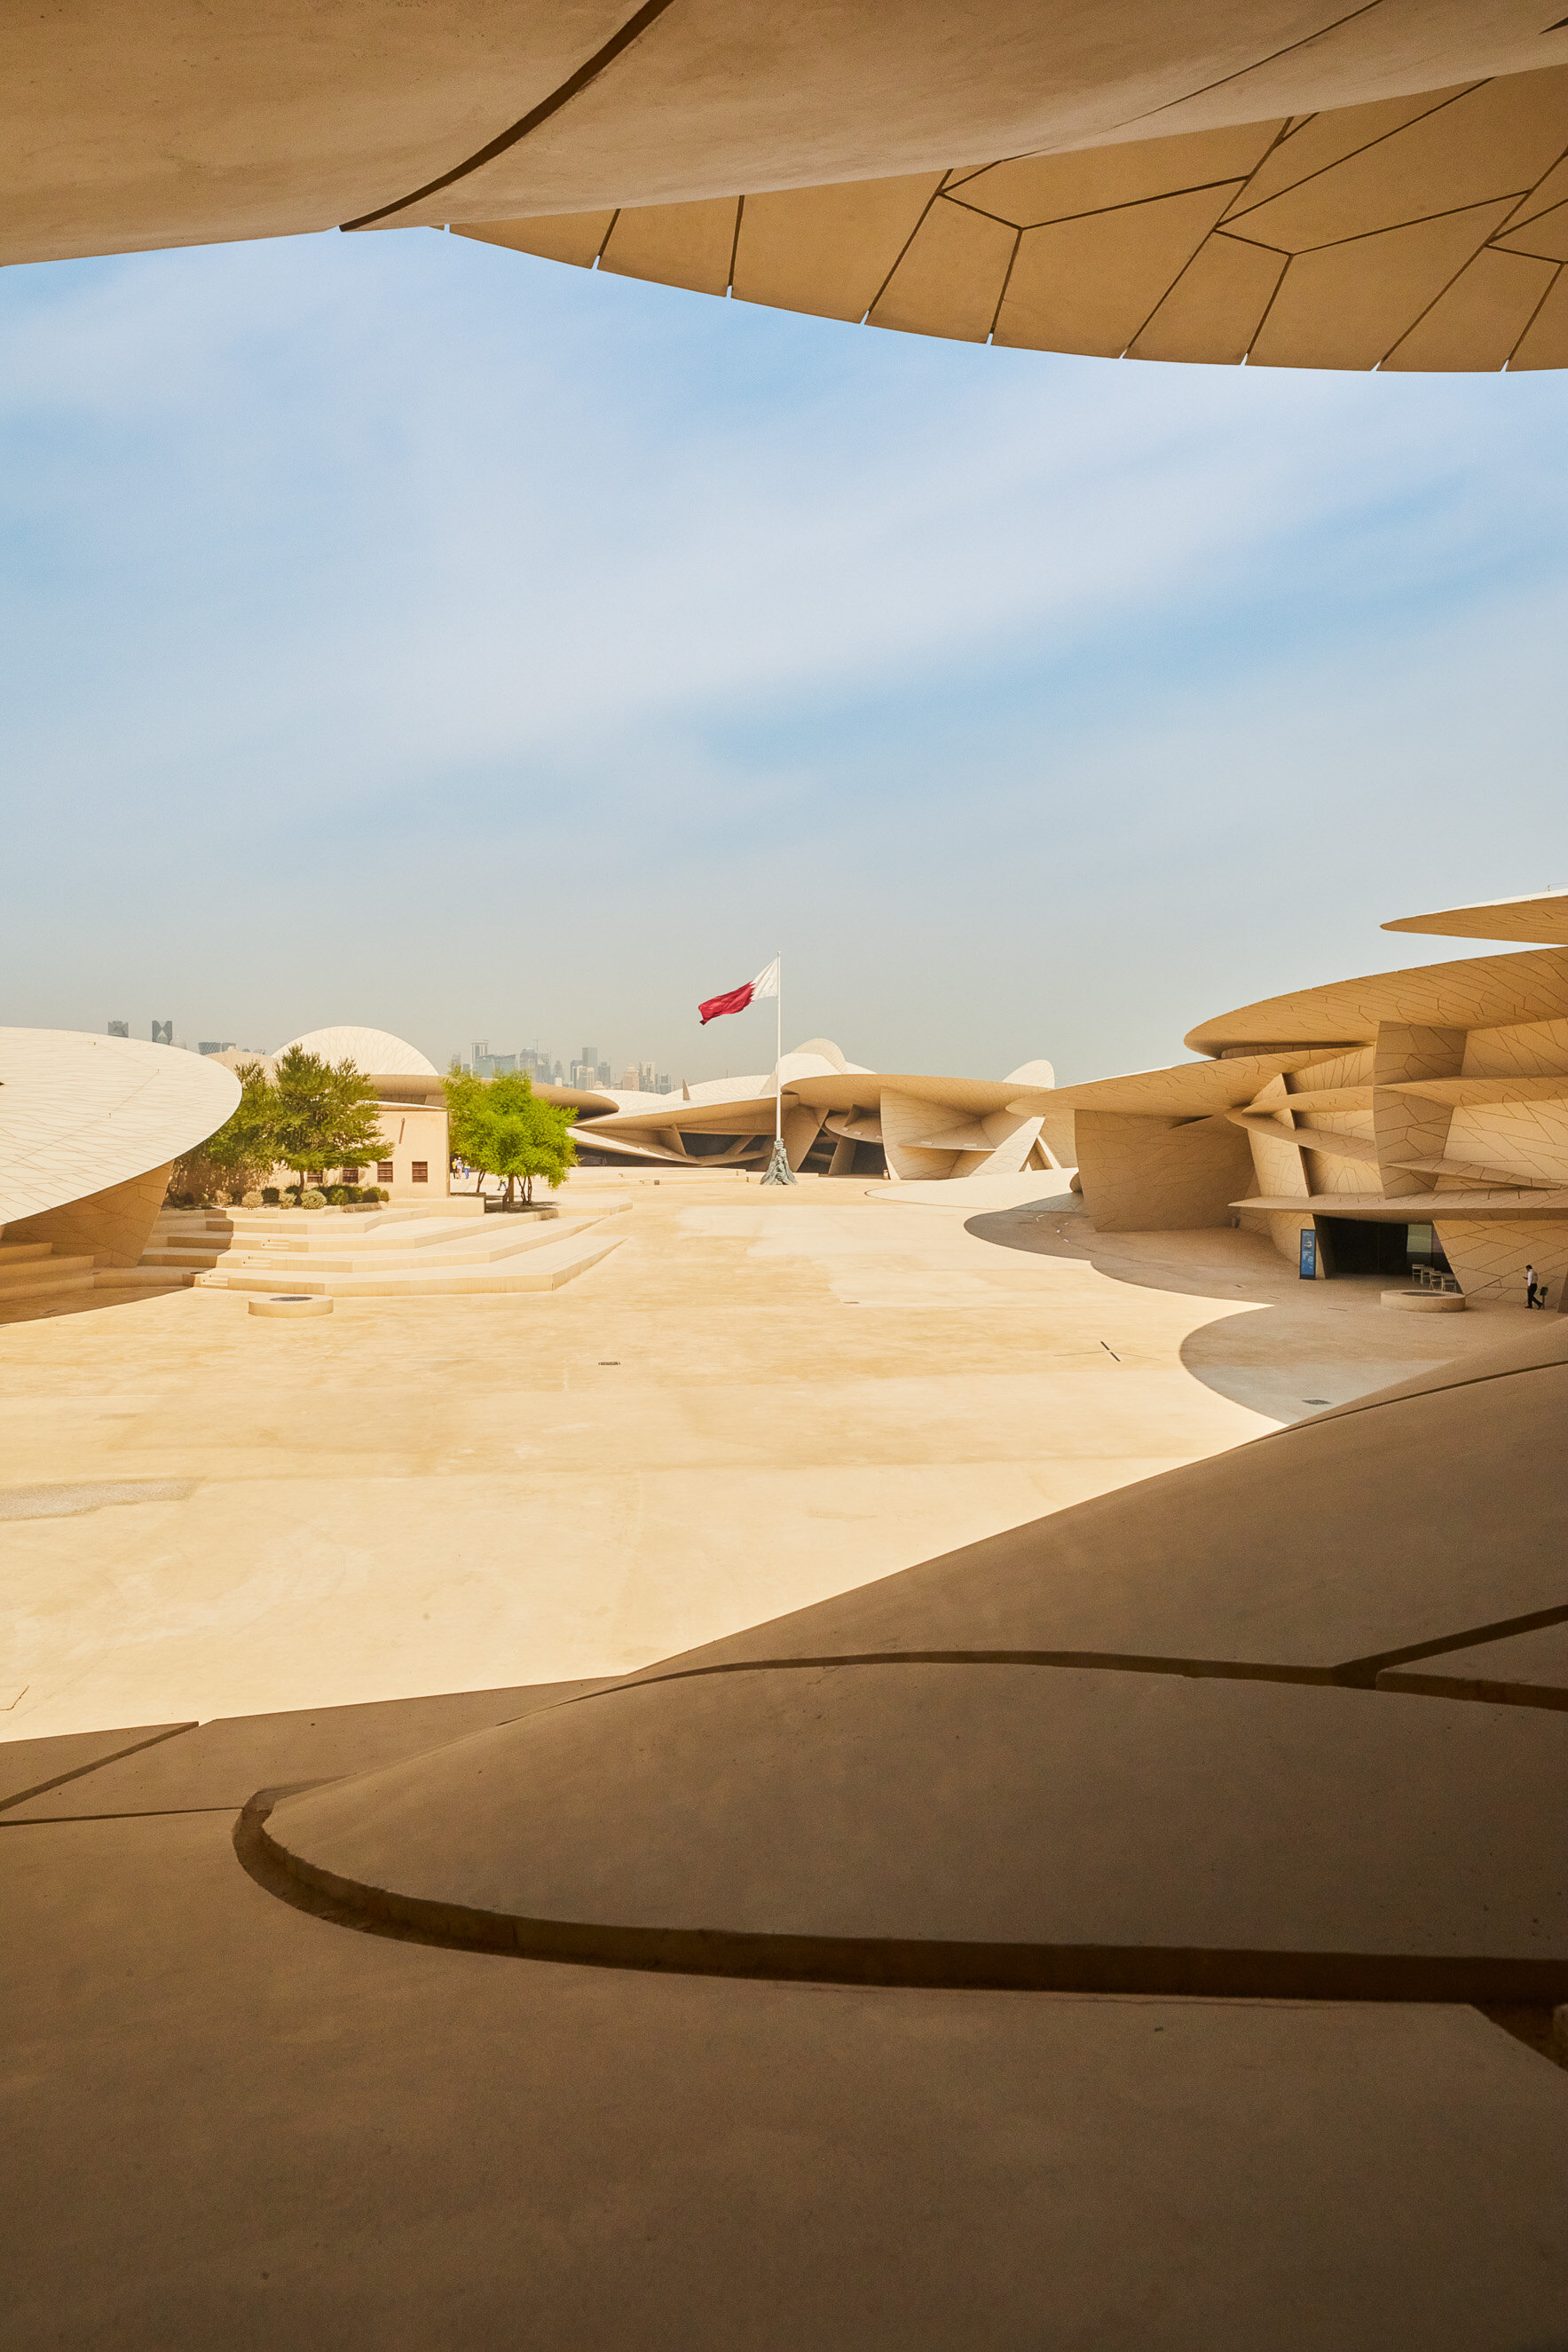 关于Visit Qatar (卡塔尔旅游)